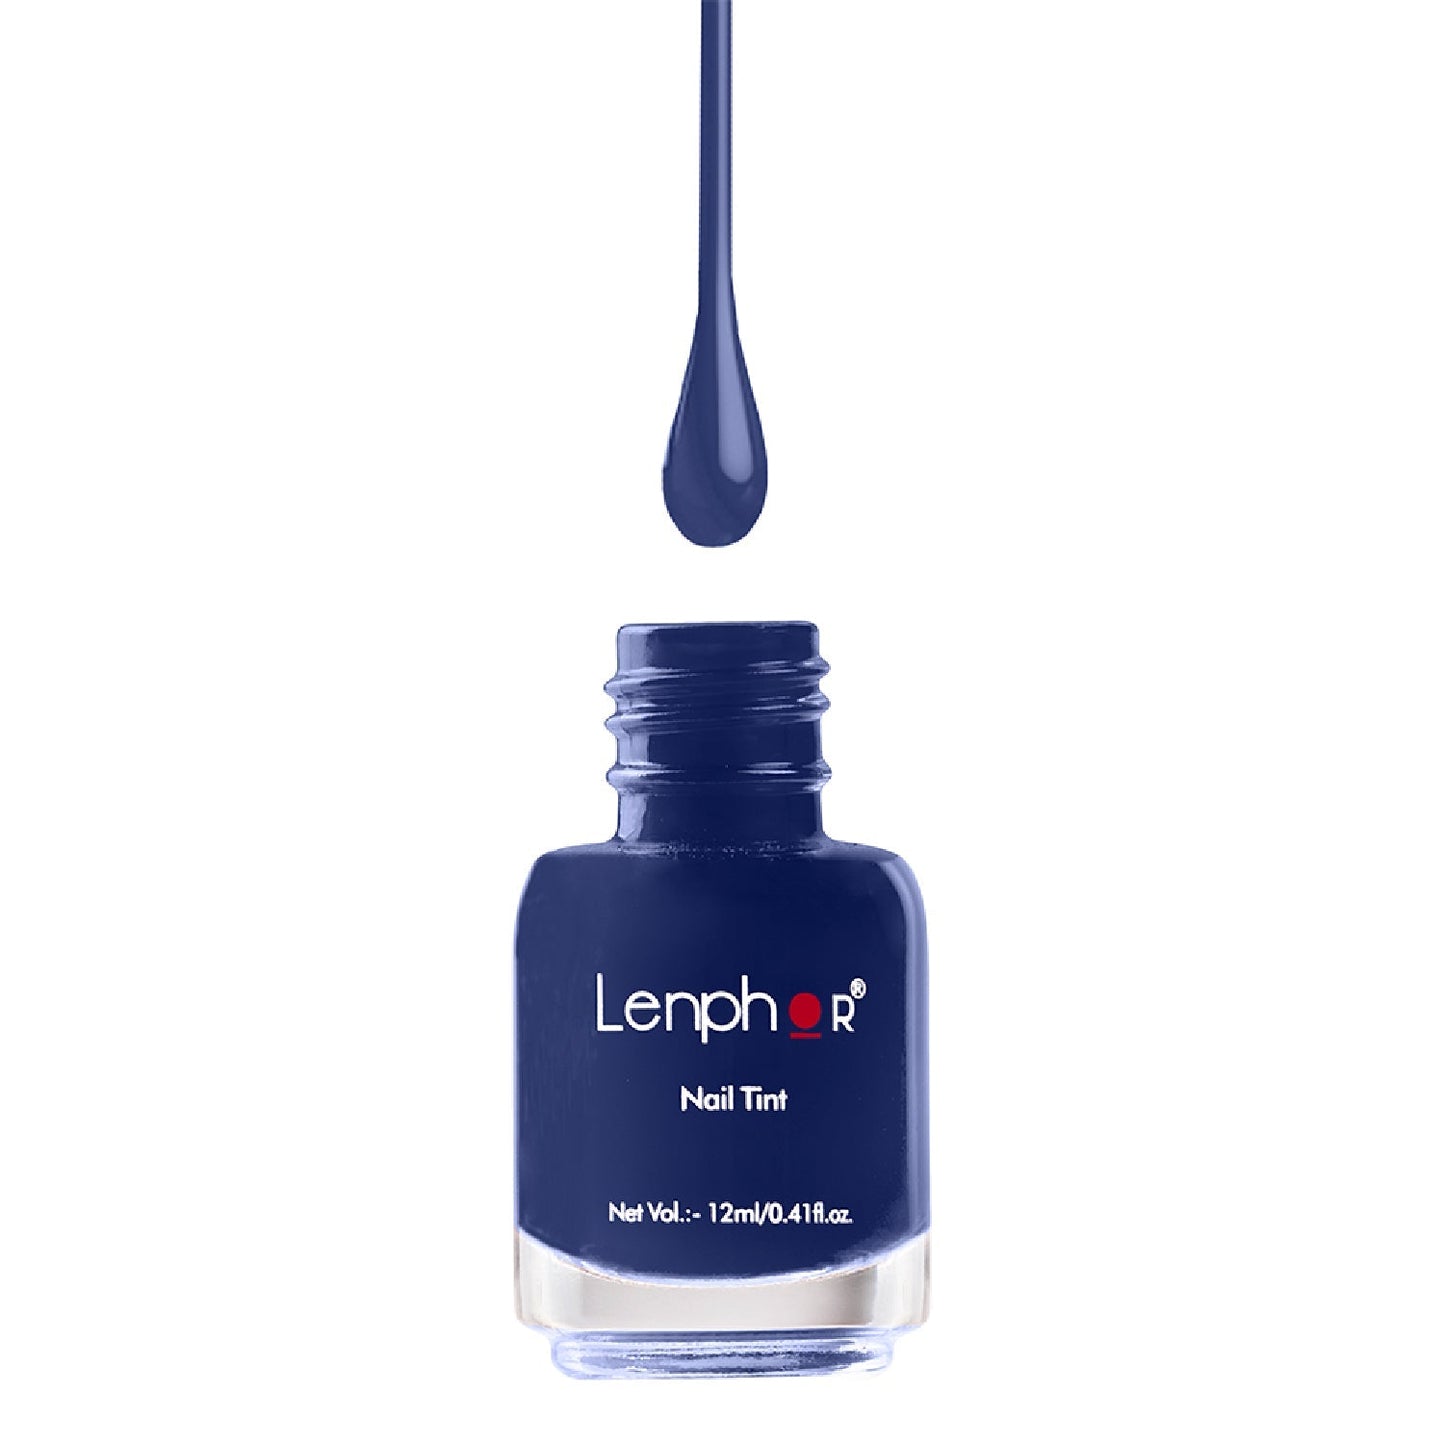 Lenphor Gel Finish Nail Tints